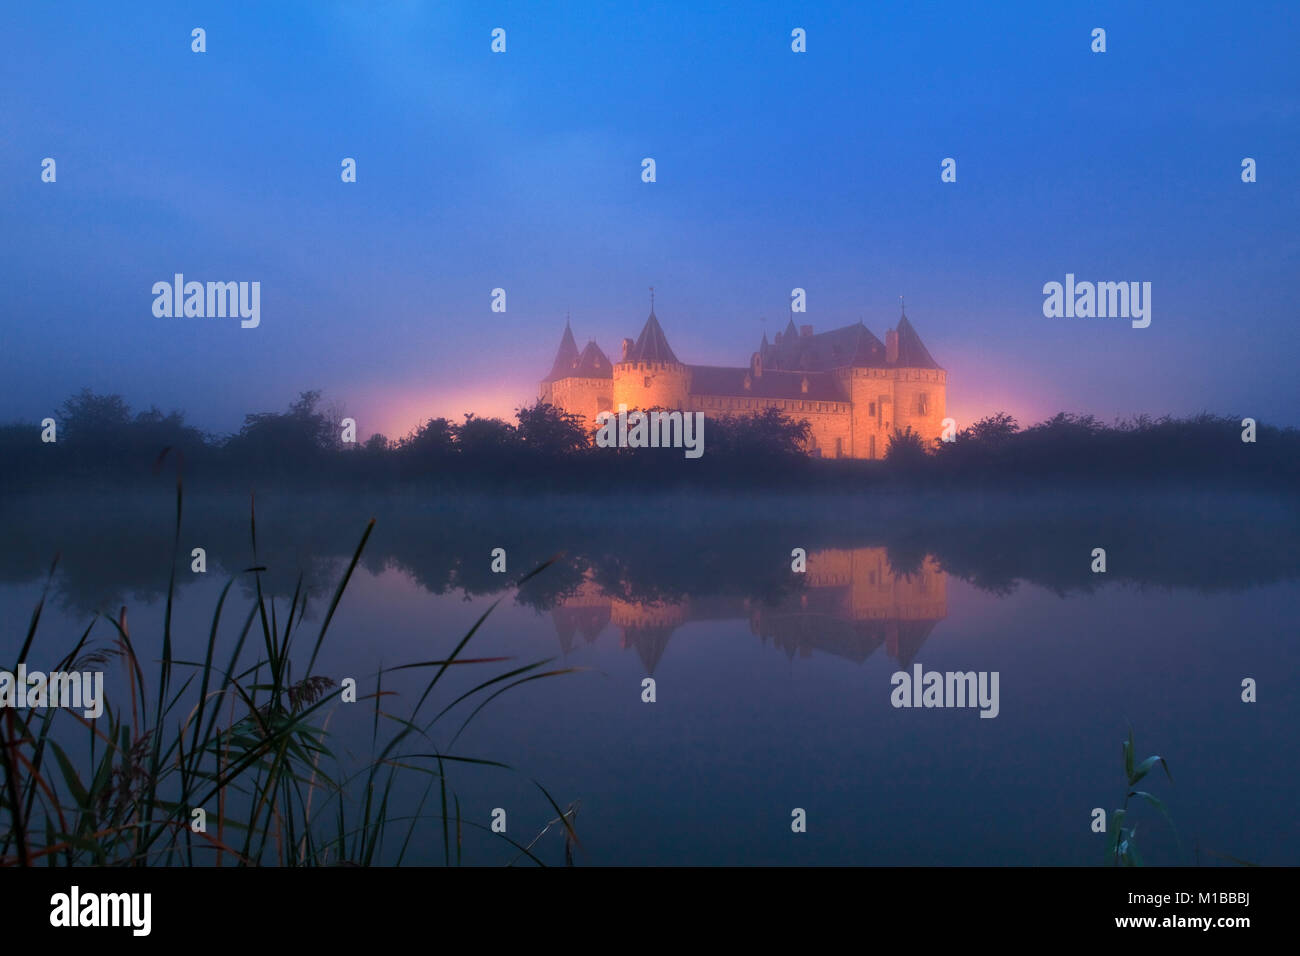 Die Niederlande, Muiden, beleuchtete Burg namens Muiderslot in Nebel im Morgengrauen. Stockfoto